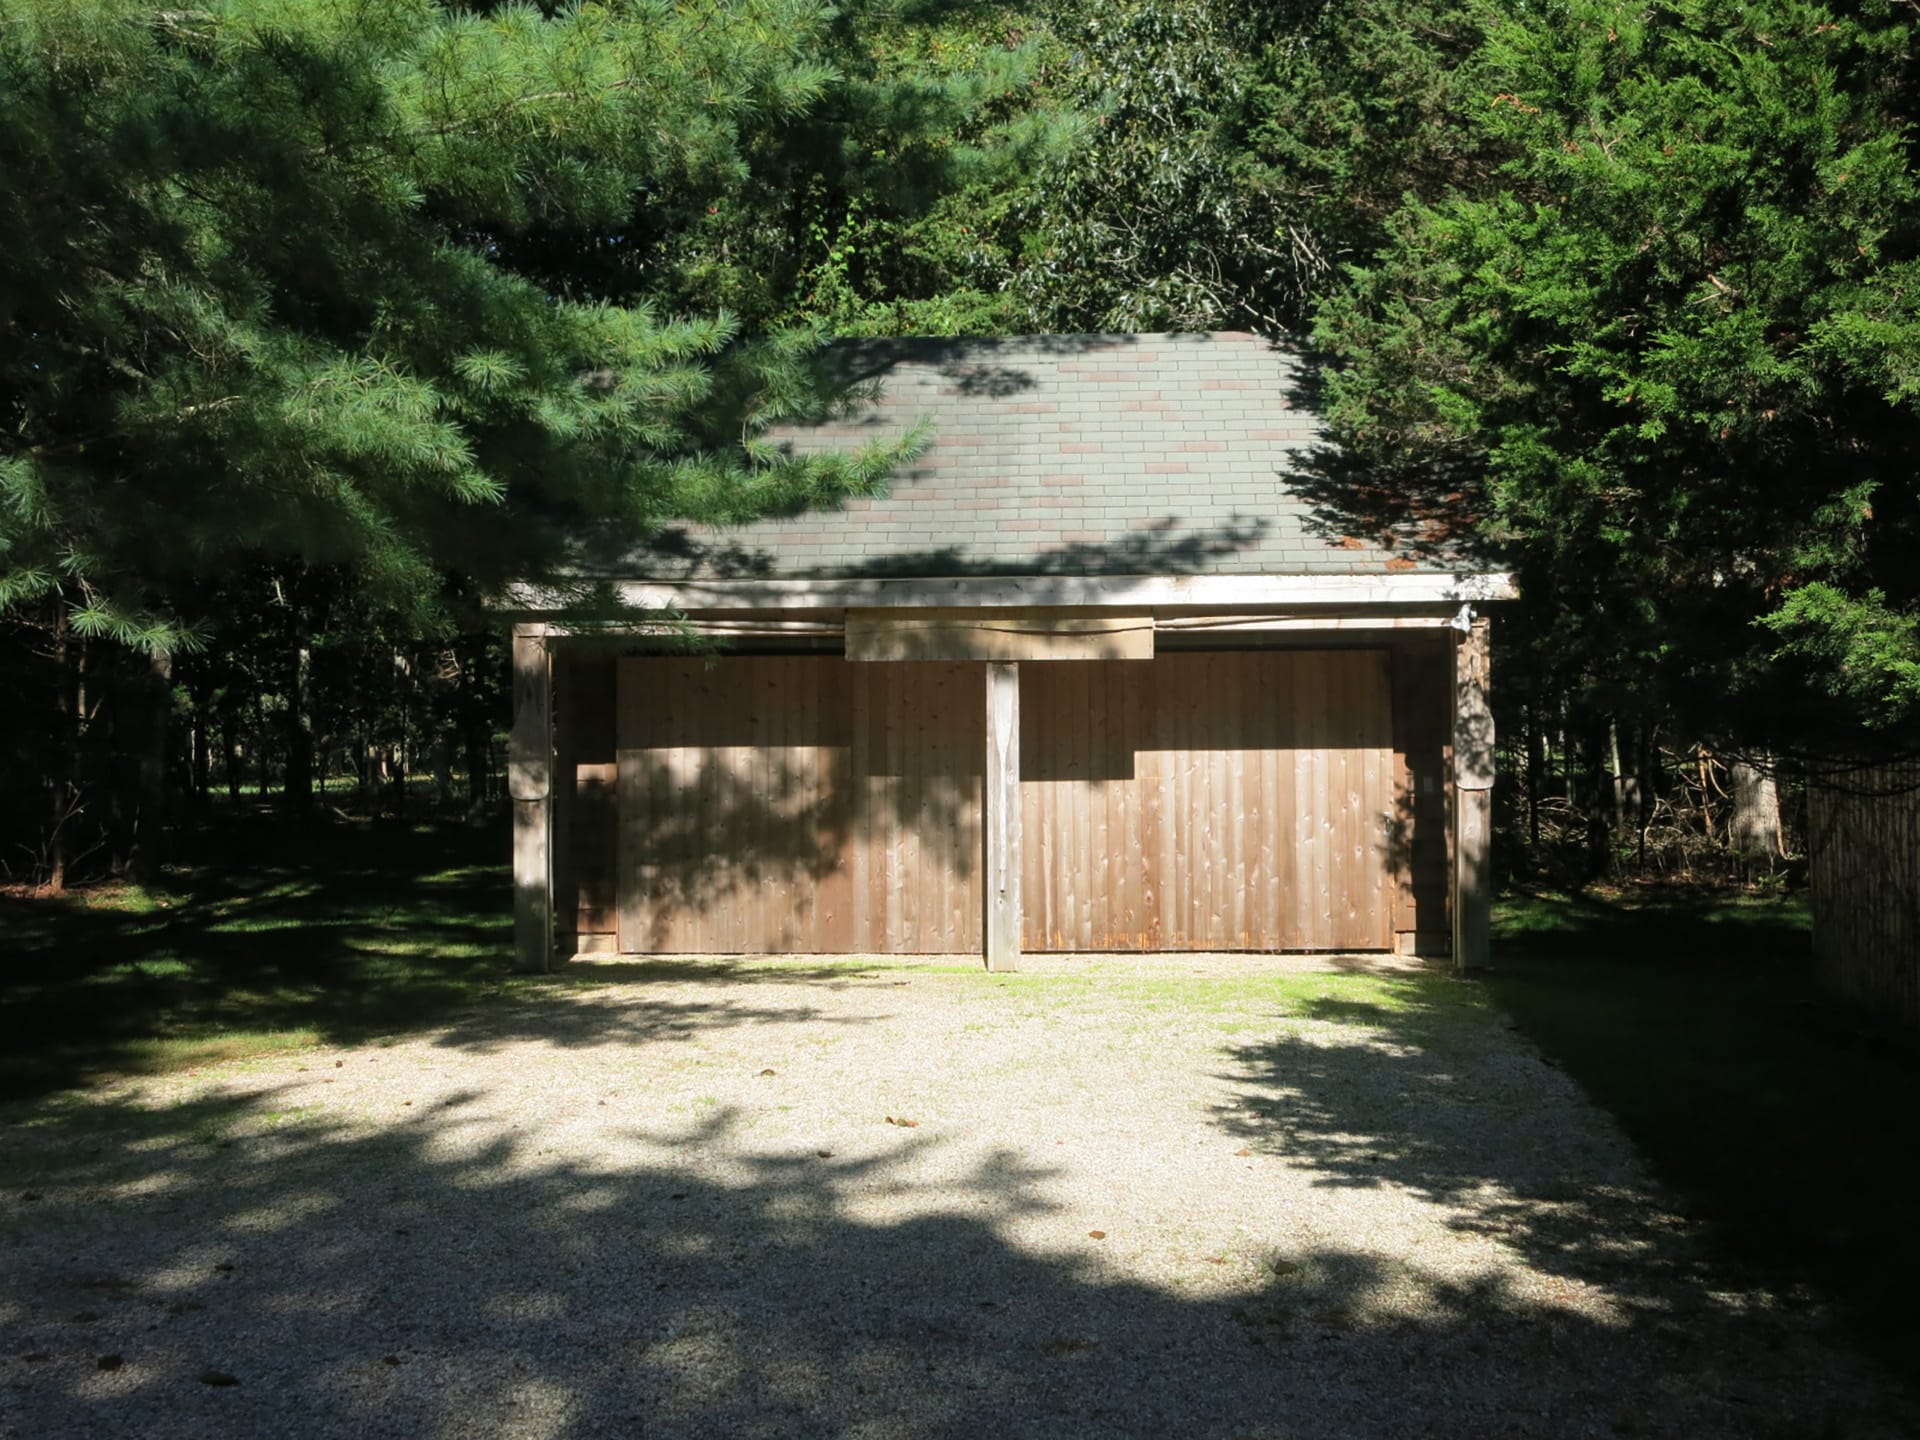 Original location of a Hampton's house's tool shed